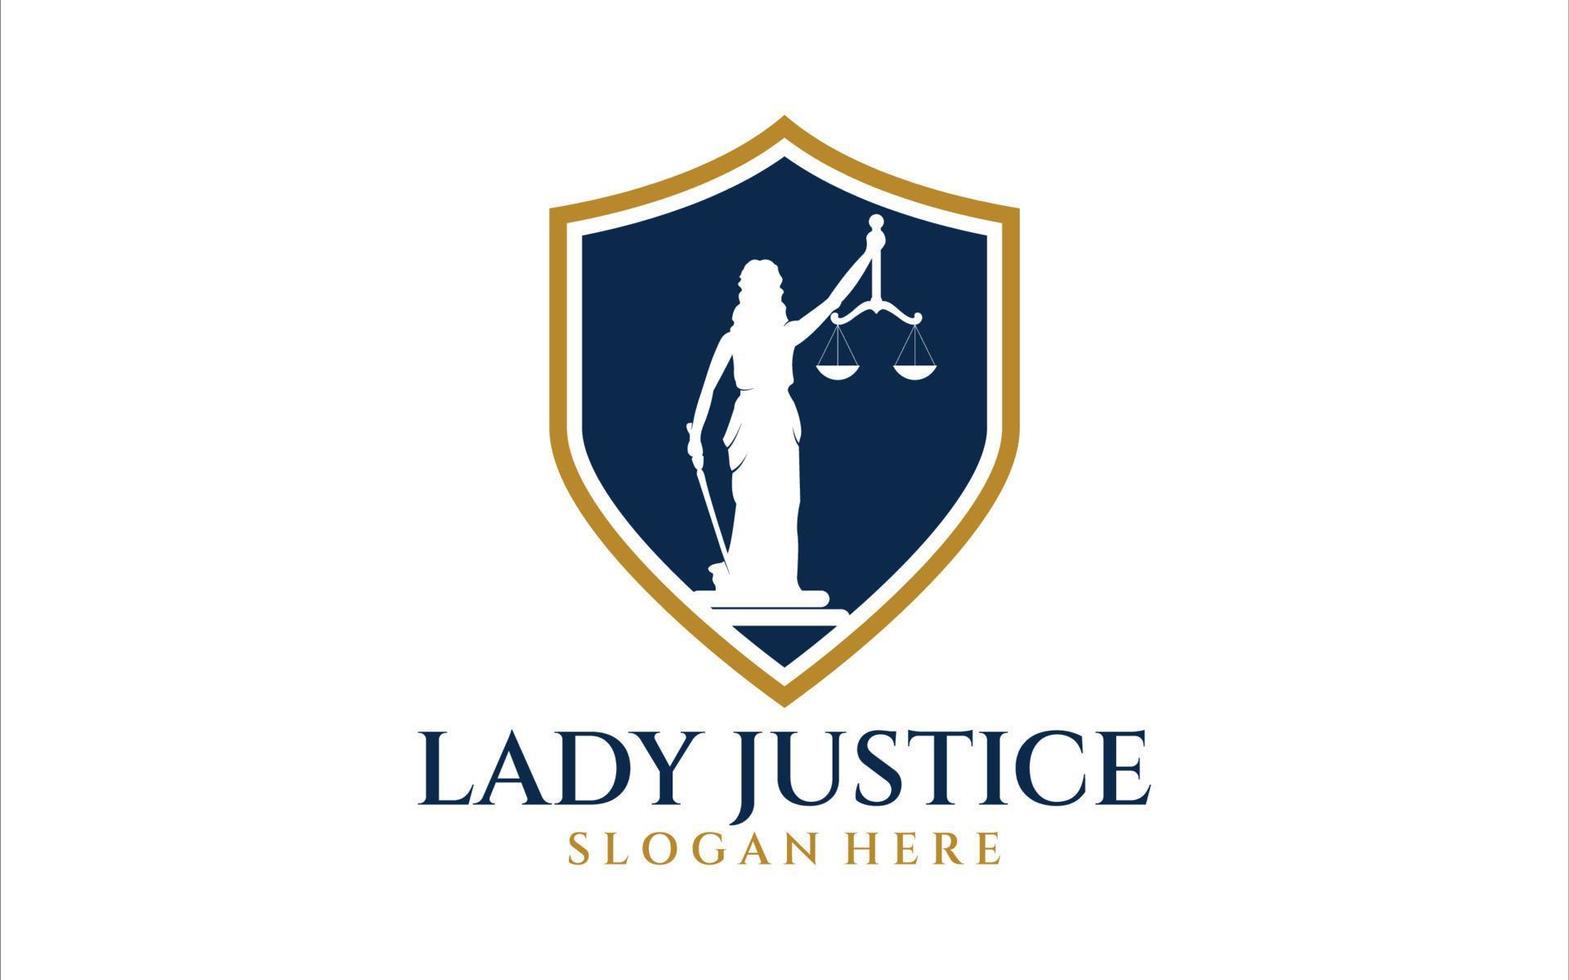 concepto de derecho de dama, abogada, diseño de justicia.logotipo o etiqueta para bufete de abogados. ilustración vectorial vector